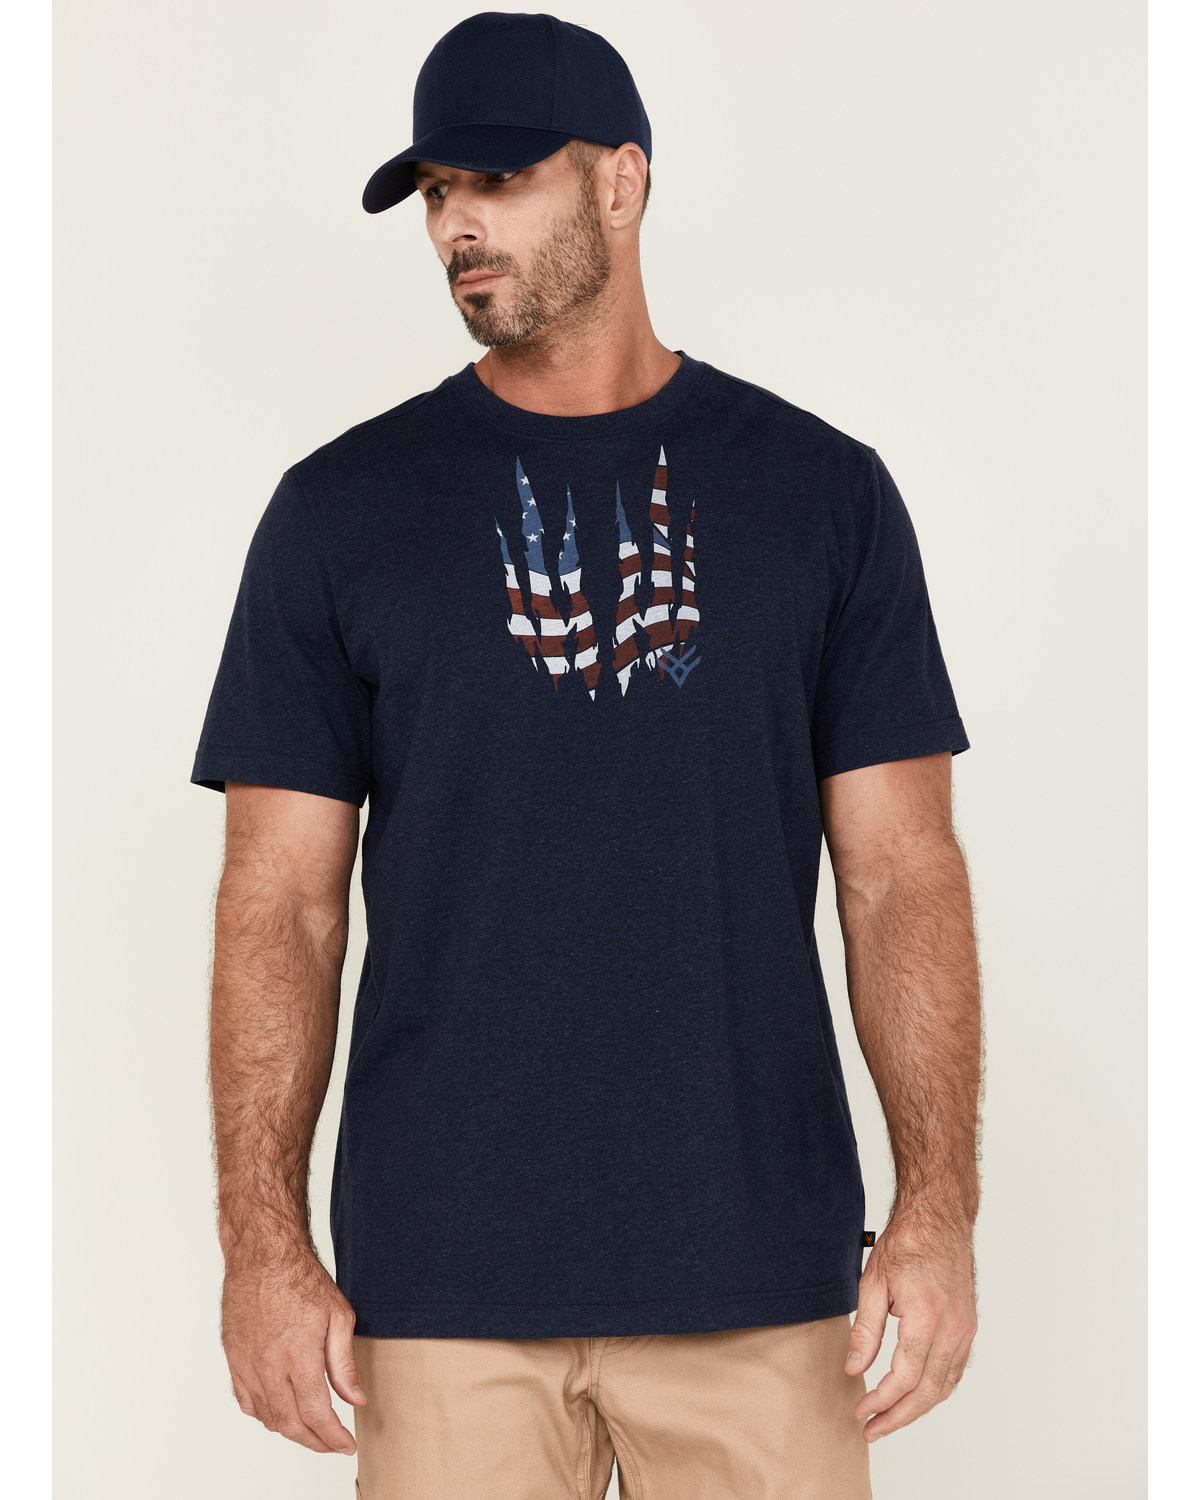 Hawx Men's Patriotic Claw Graphic Work T-Shirt